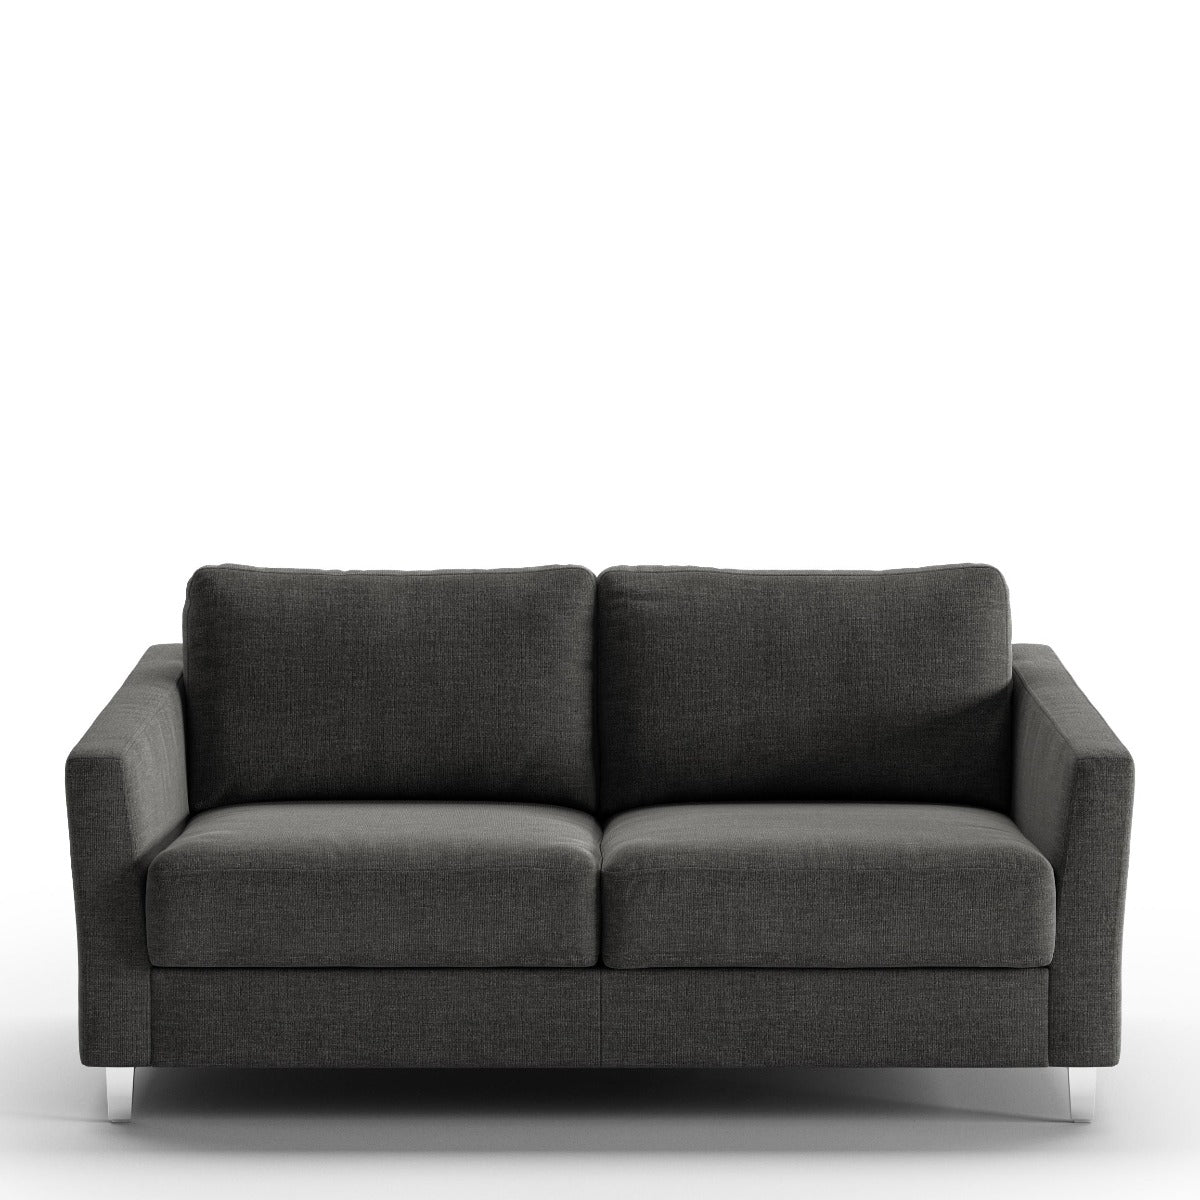 Luonto Furniture Monika Full XL Loveseat Sleeper - Oliver 515 -234/9 Chrome